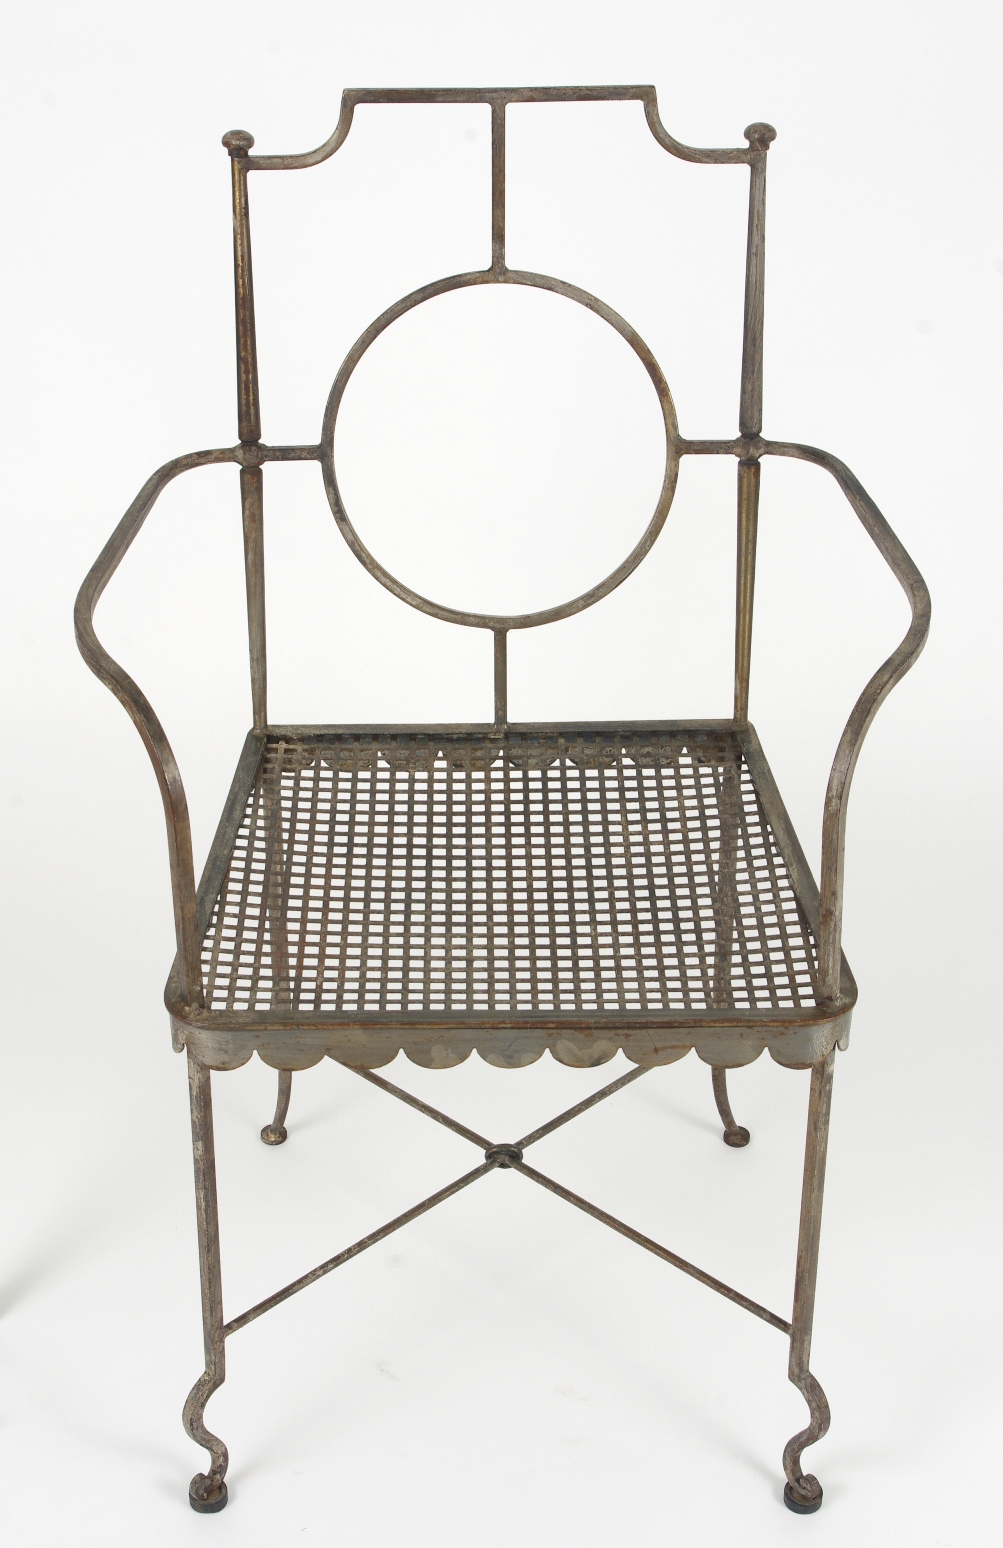 Pair of Poillerat Style Wrought Iron Garden Chairs